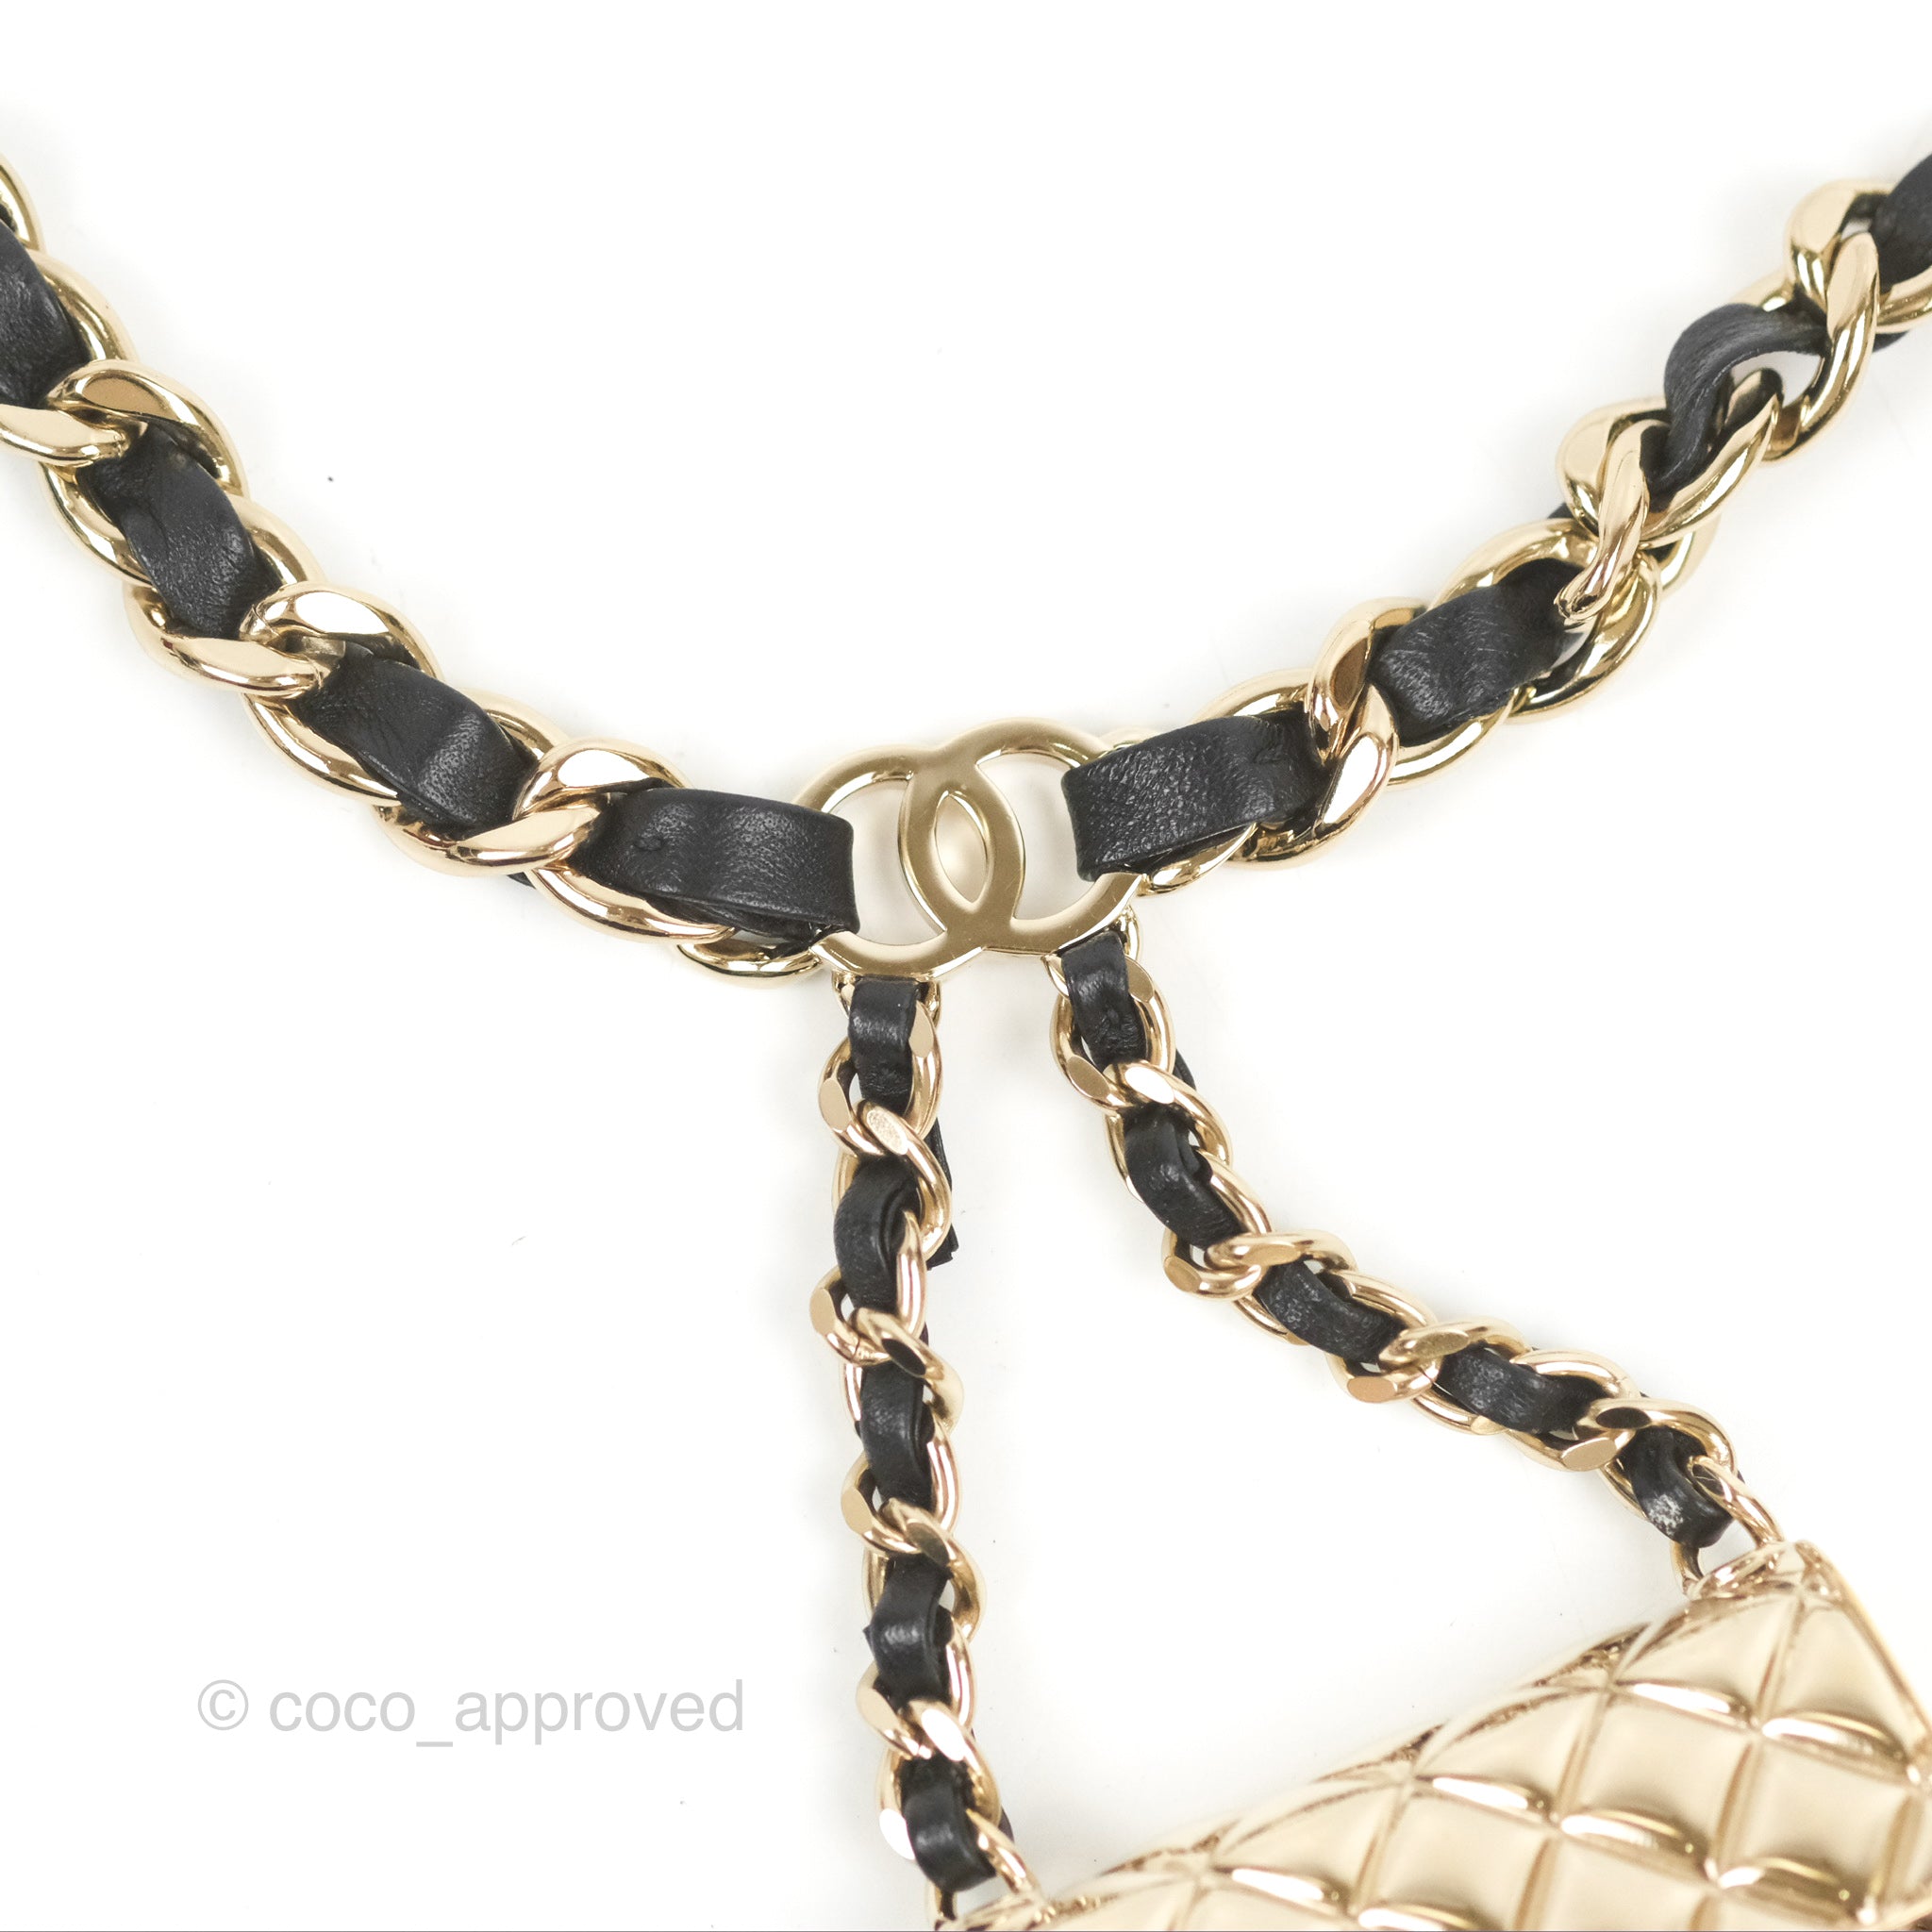 Chanel Flap Bag Charm Woven Chain Belt Black Leather Gold Tone